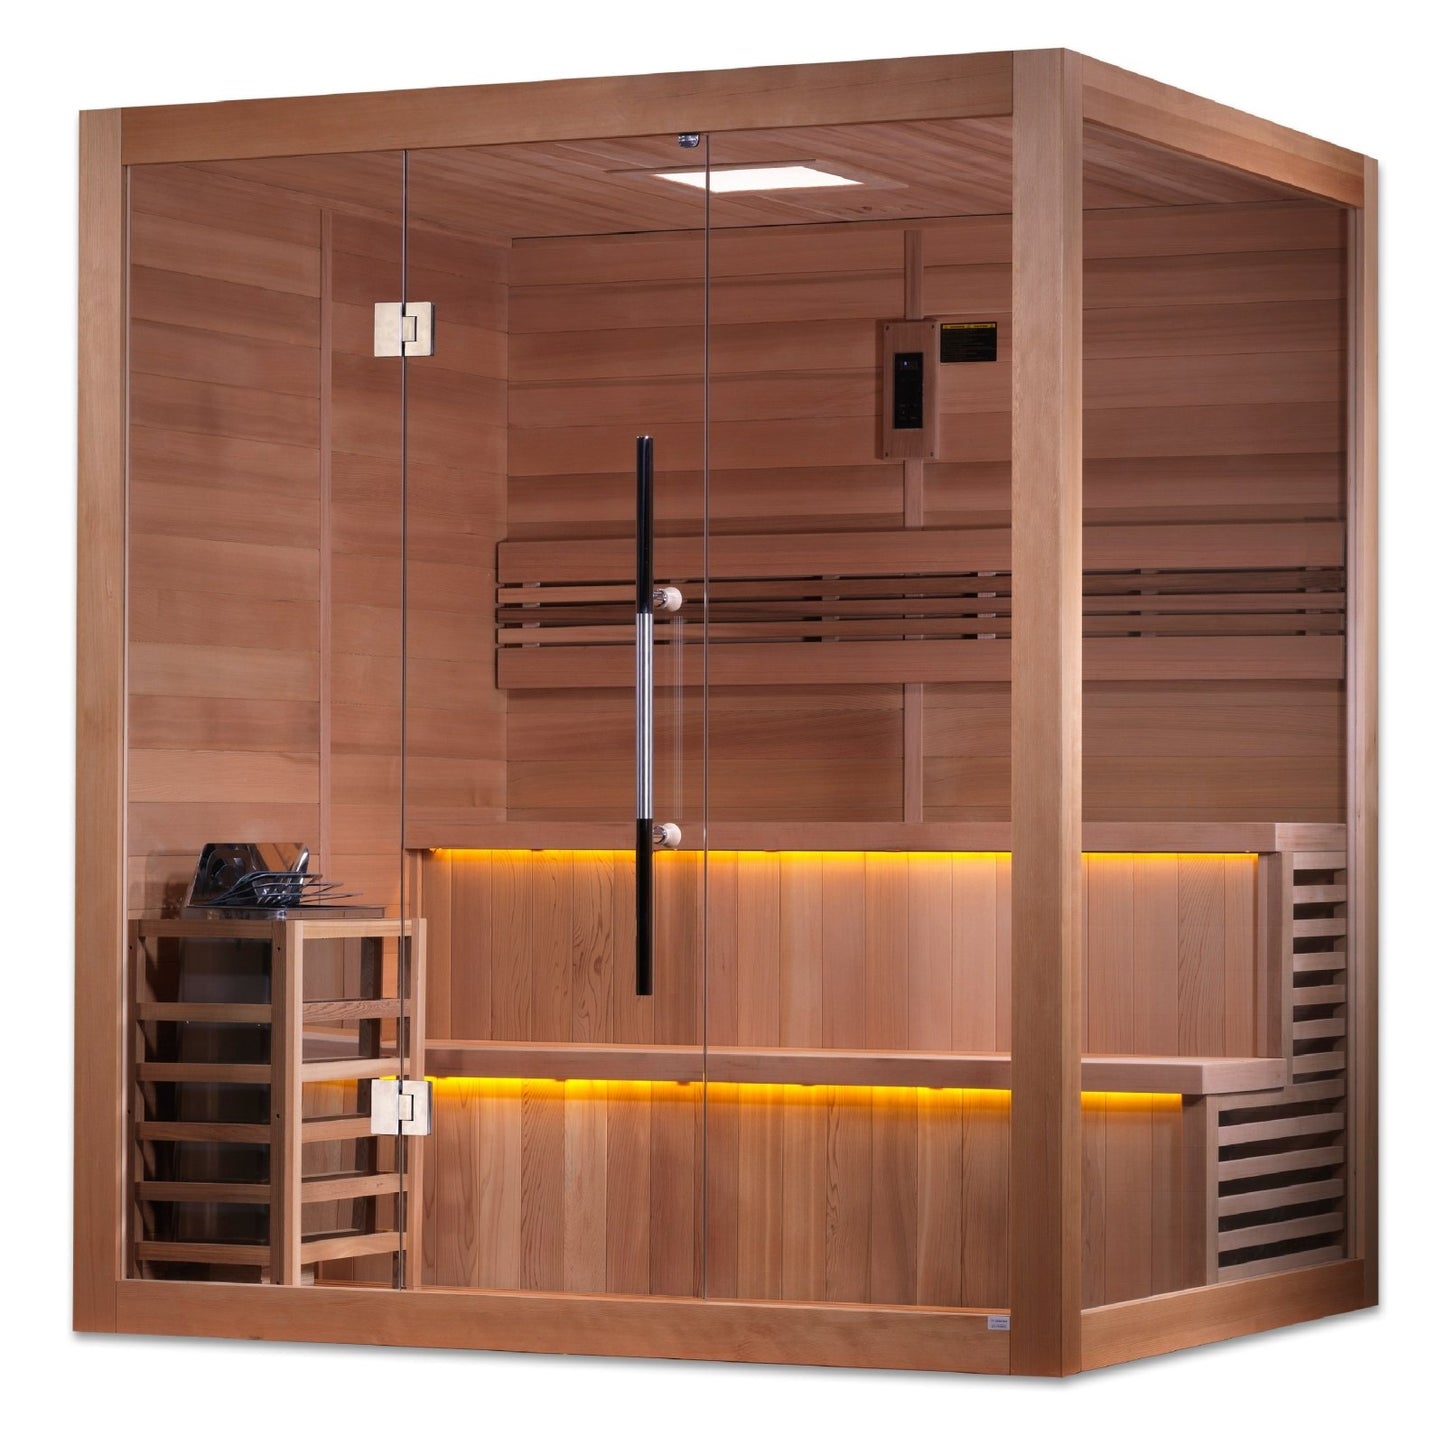 Golden Designs 6-Person Traditional Sauna "Kuusamo" - Hemlock wood | GDI-7206-01 - GDI-7206-01